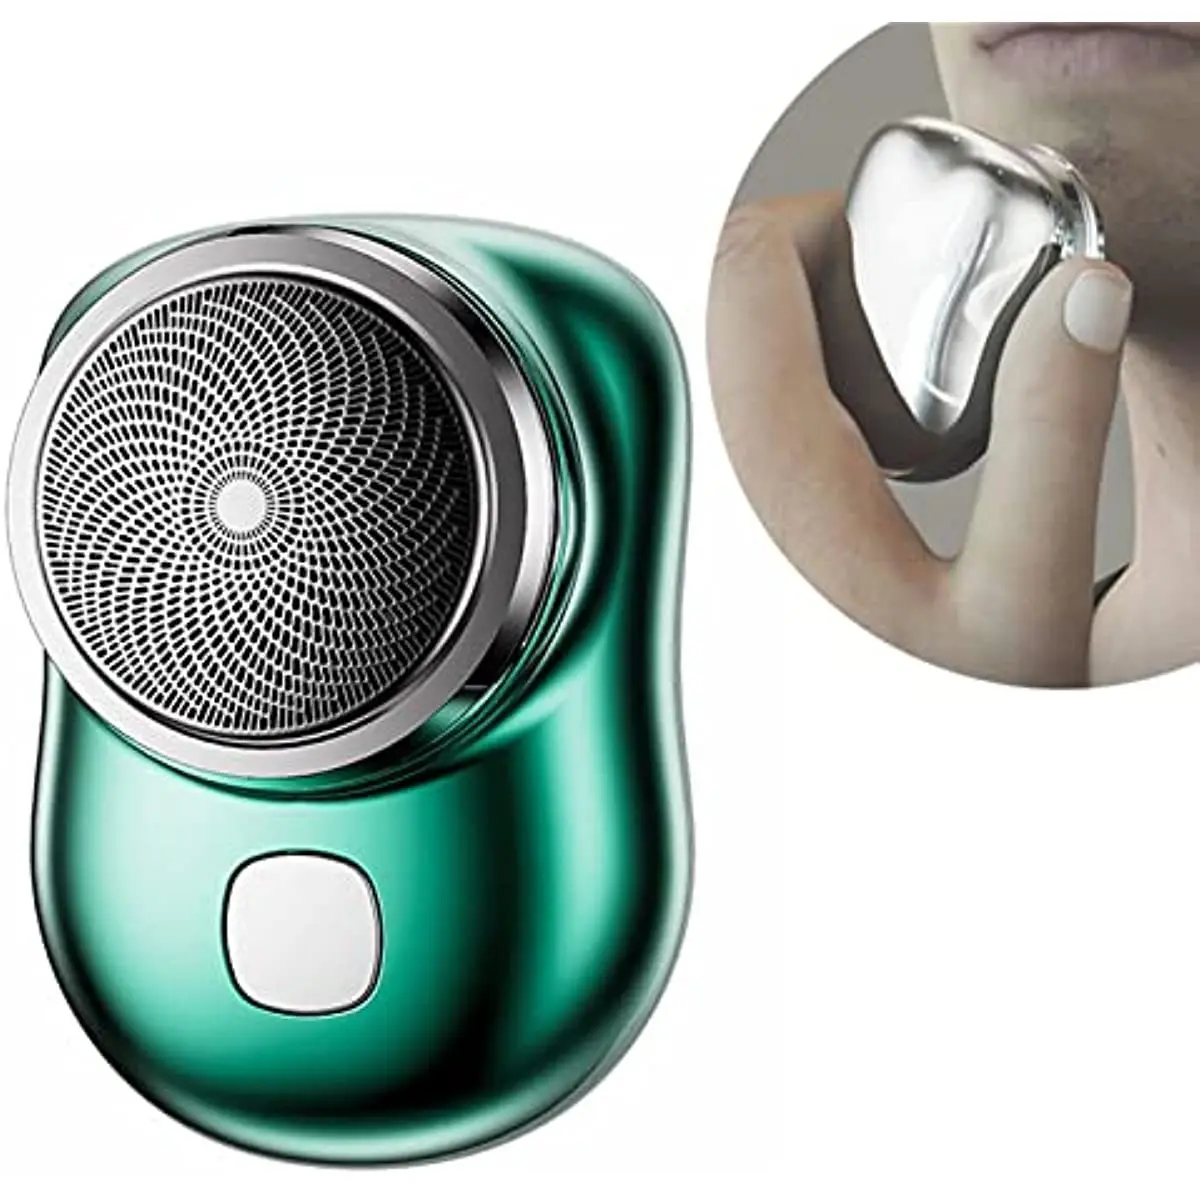 Ric shaver ipx7 waterproof shaving machine wet dry double use mini fast charging pocket thumb200